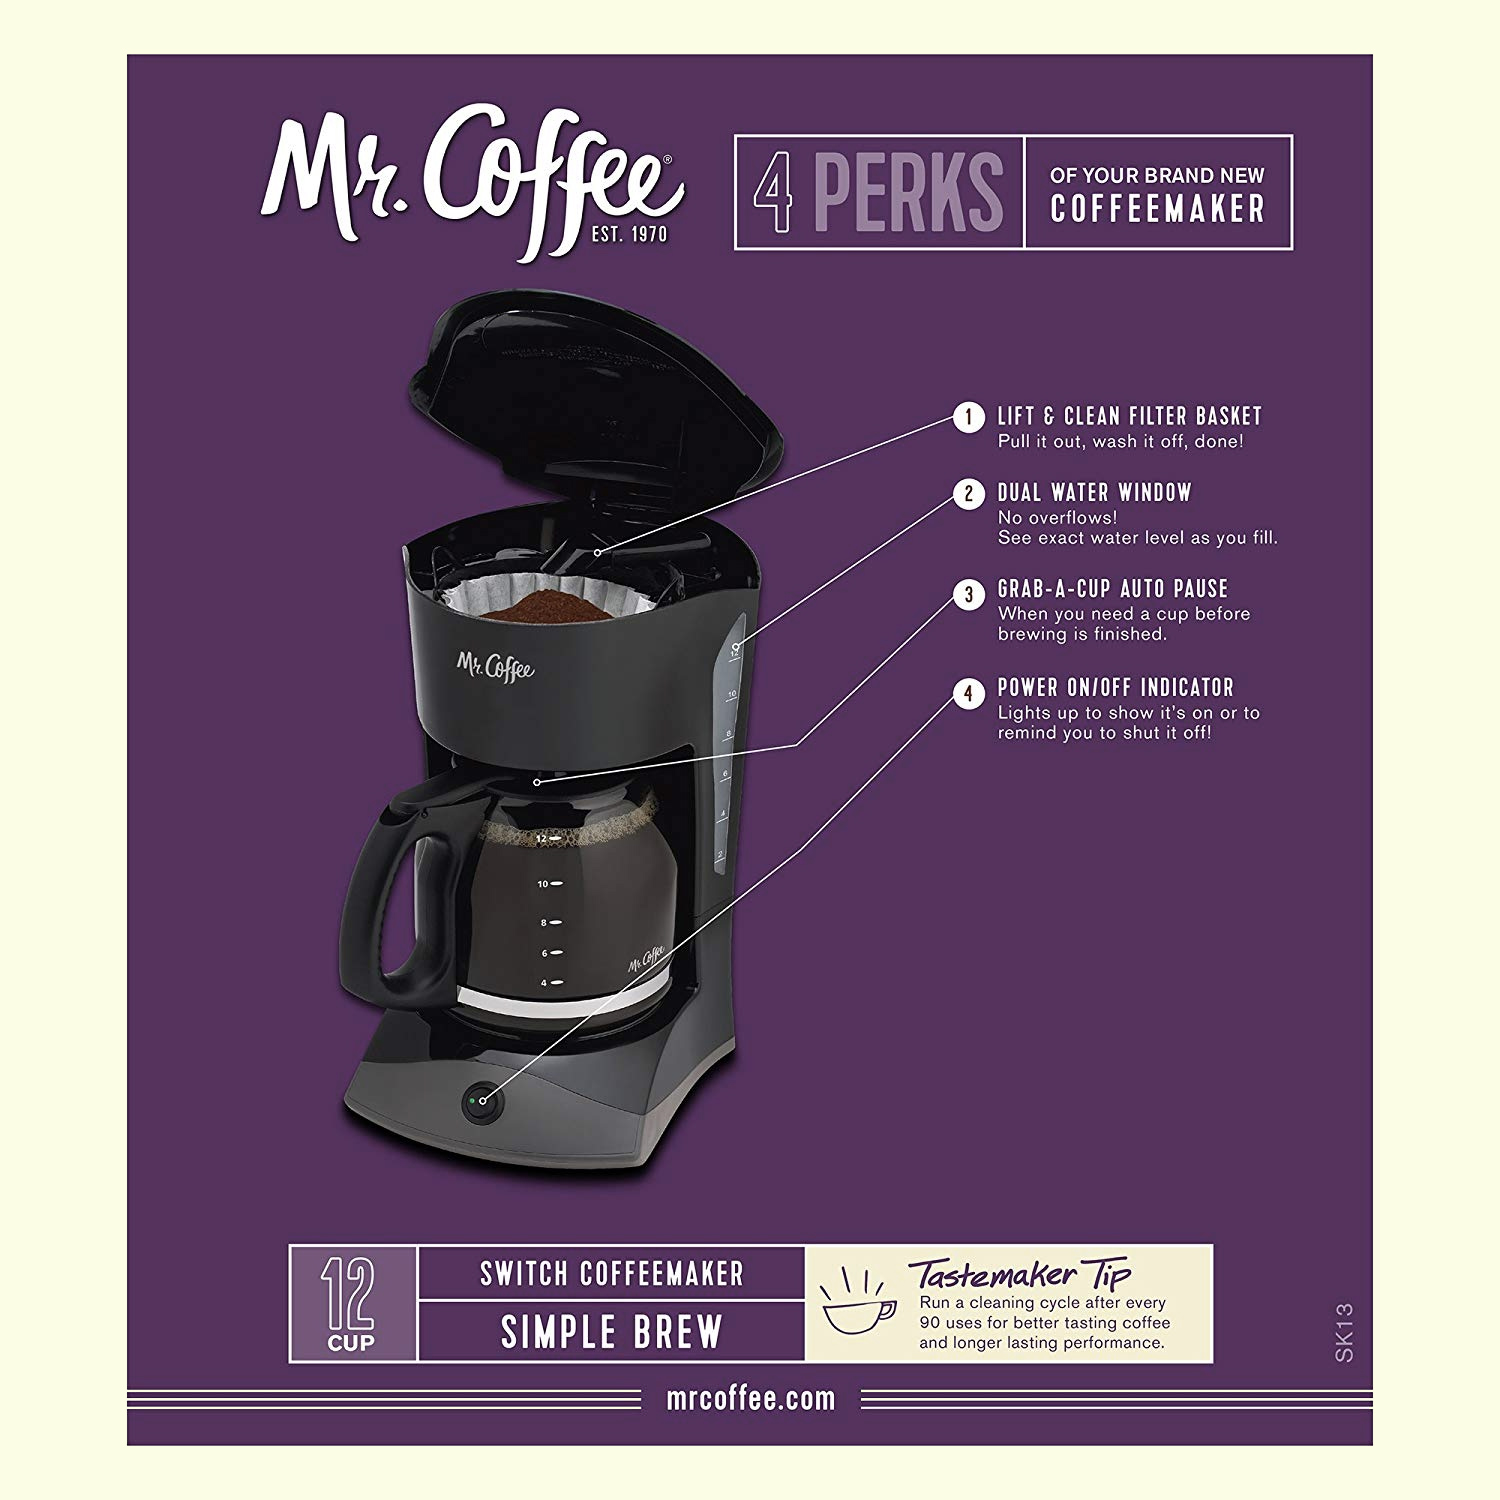 12 Cup Coffee Maker, Smart Plug Compatible - Model 43501PS